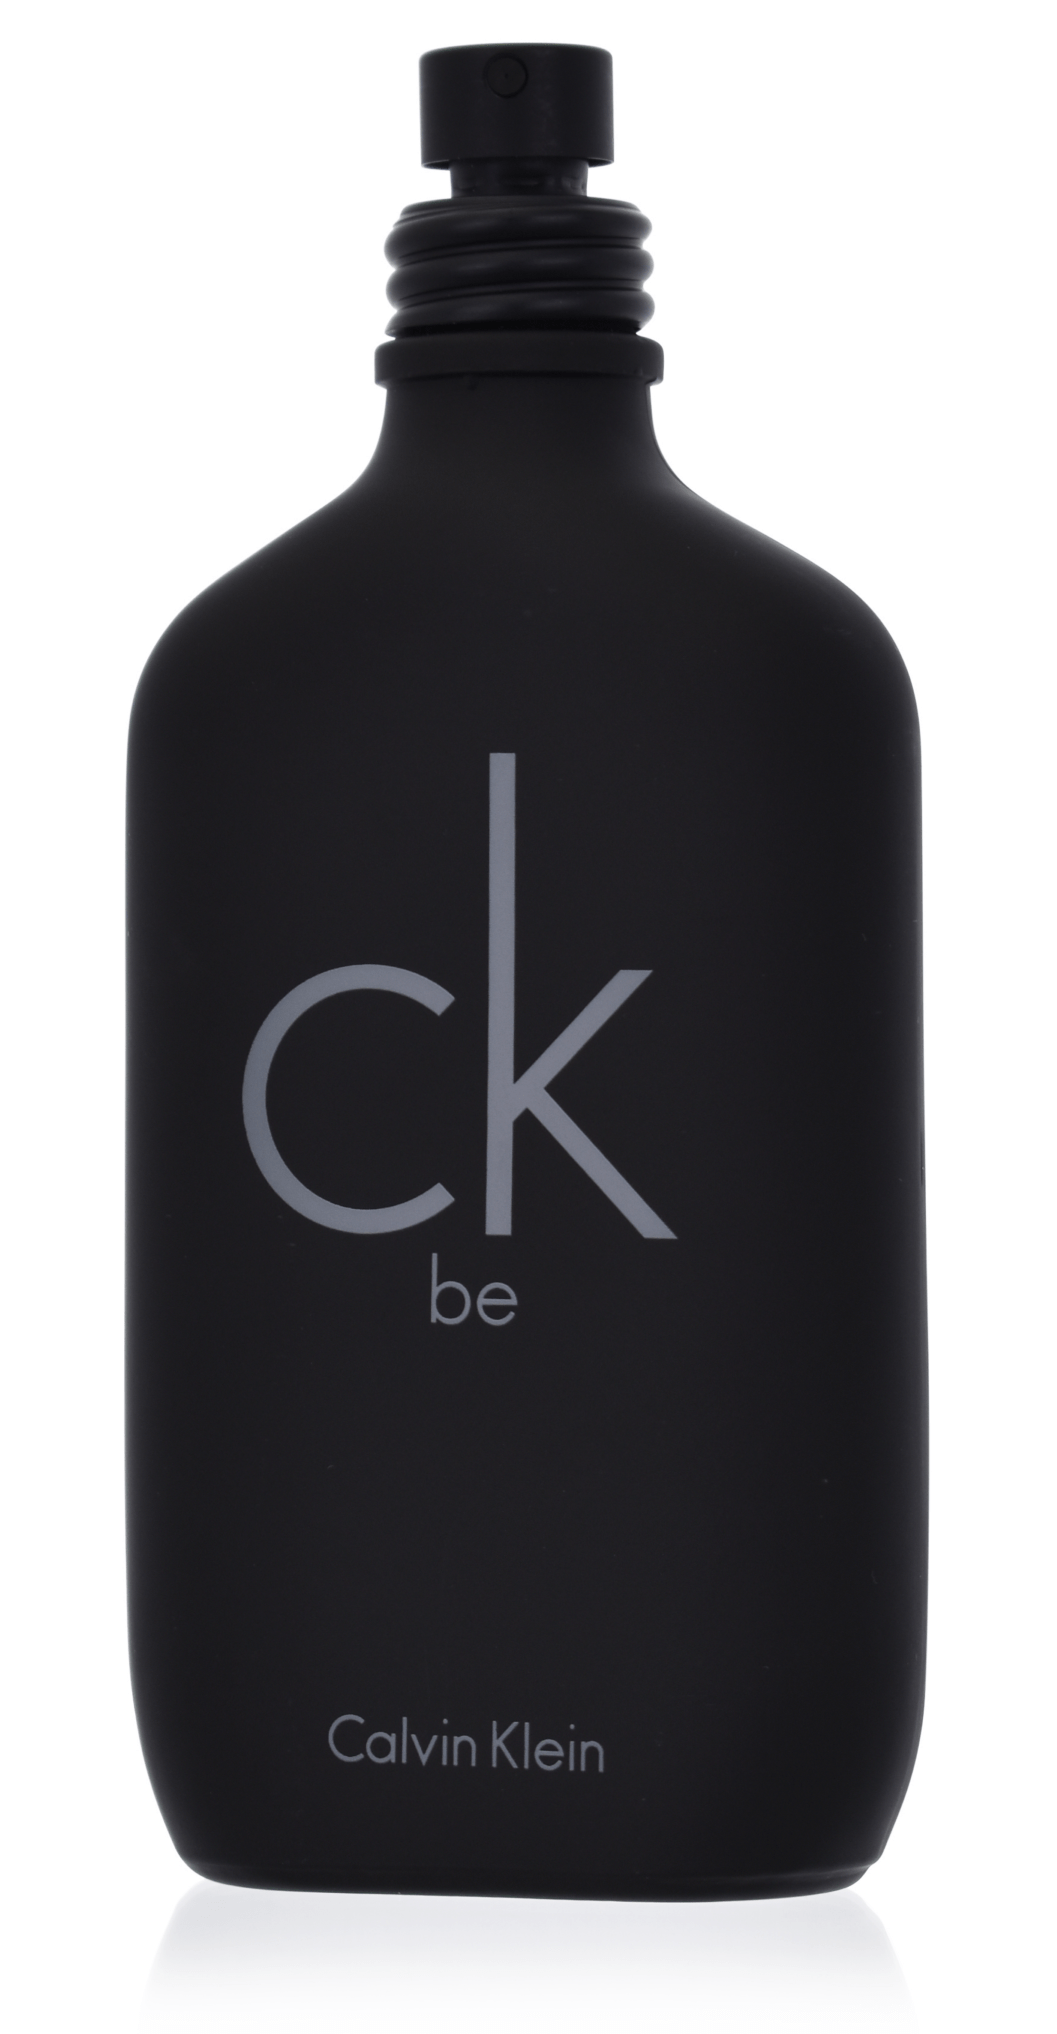 Calvin Klein CK Be 100 ml Eau de Toilette Tester